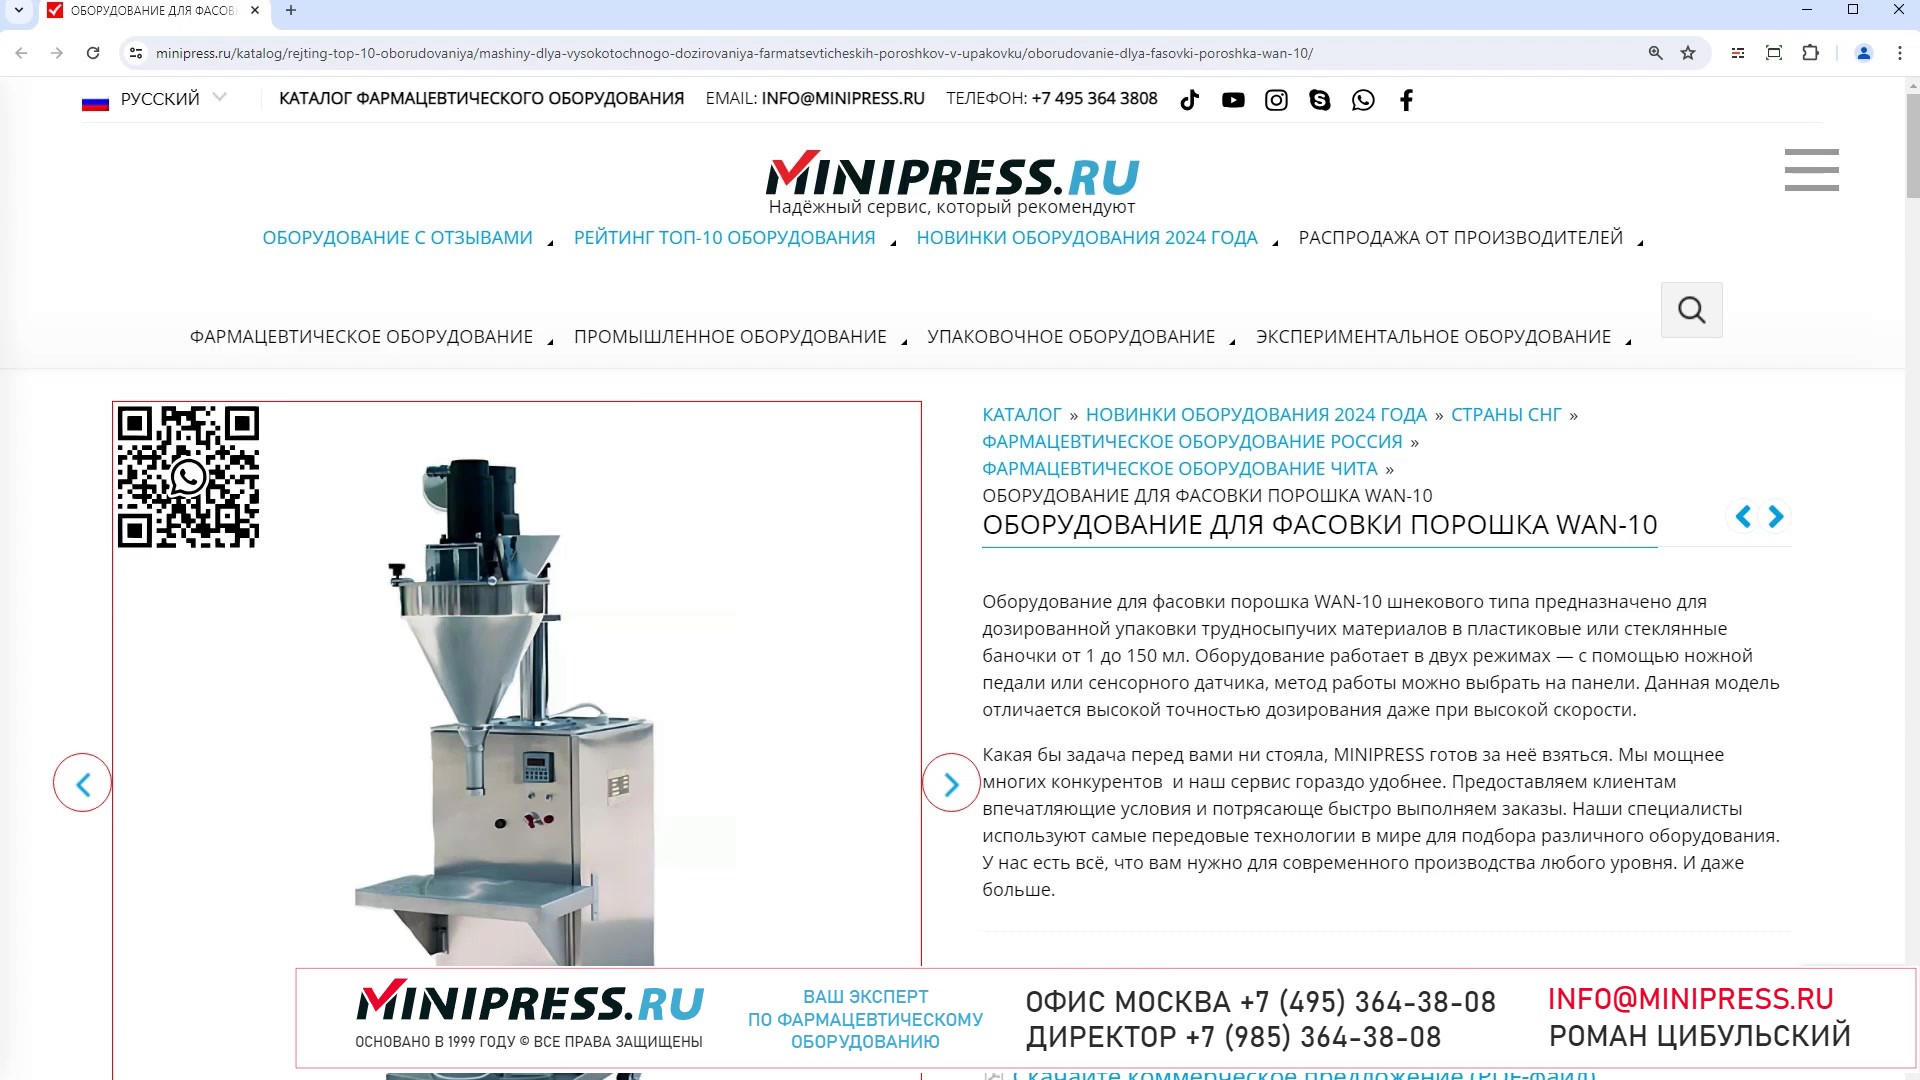 Minipress.ru Оборудование для фасовки порошка WAN-10